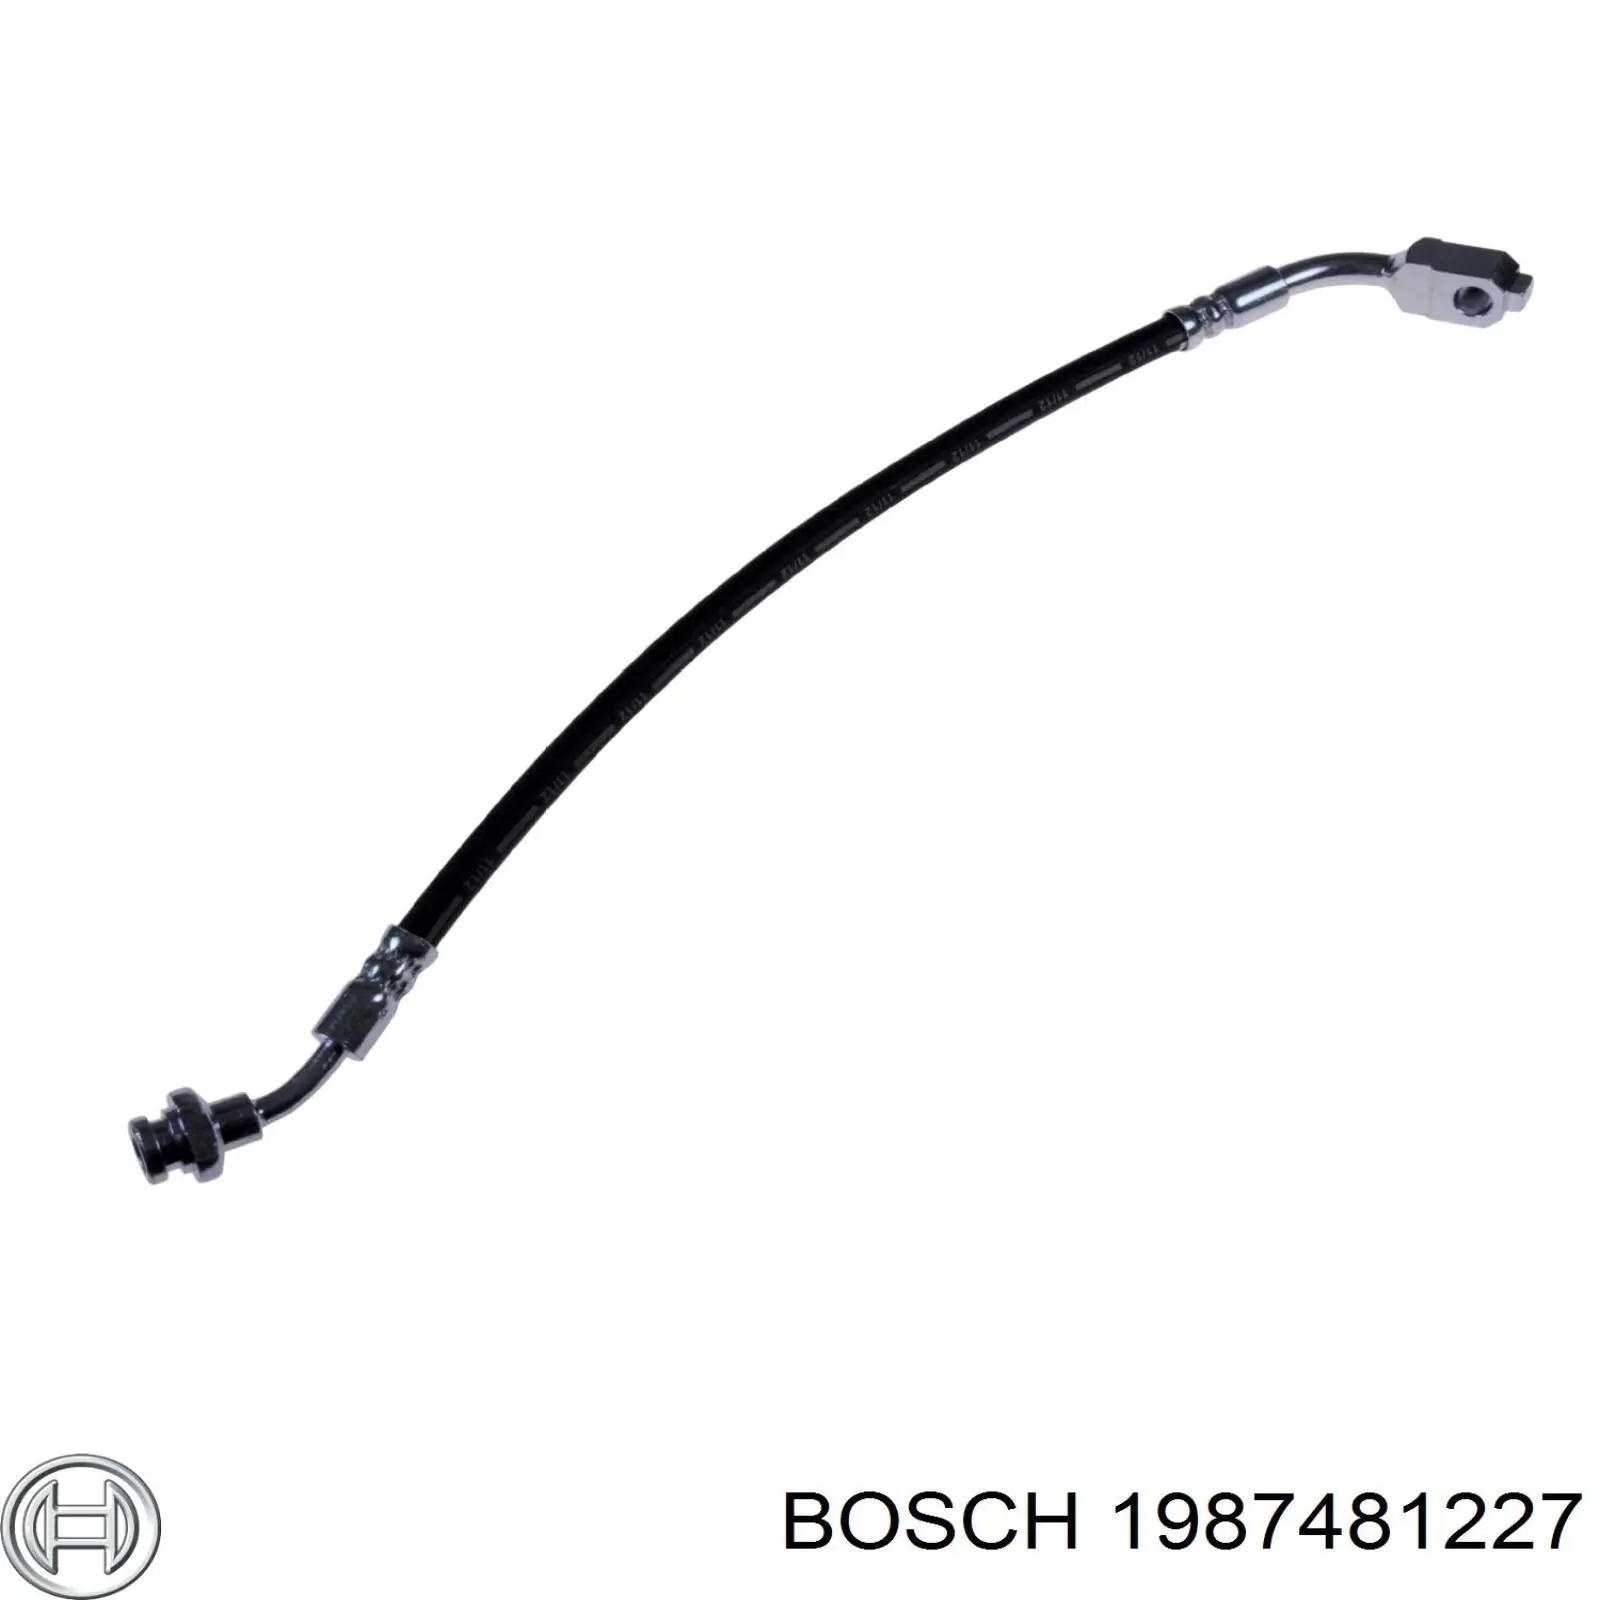 Tubo flexible de frenos delantero derecho 1987481227 Bosch